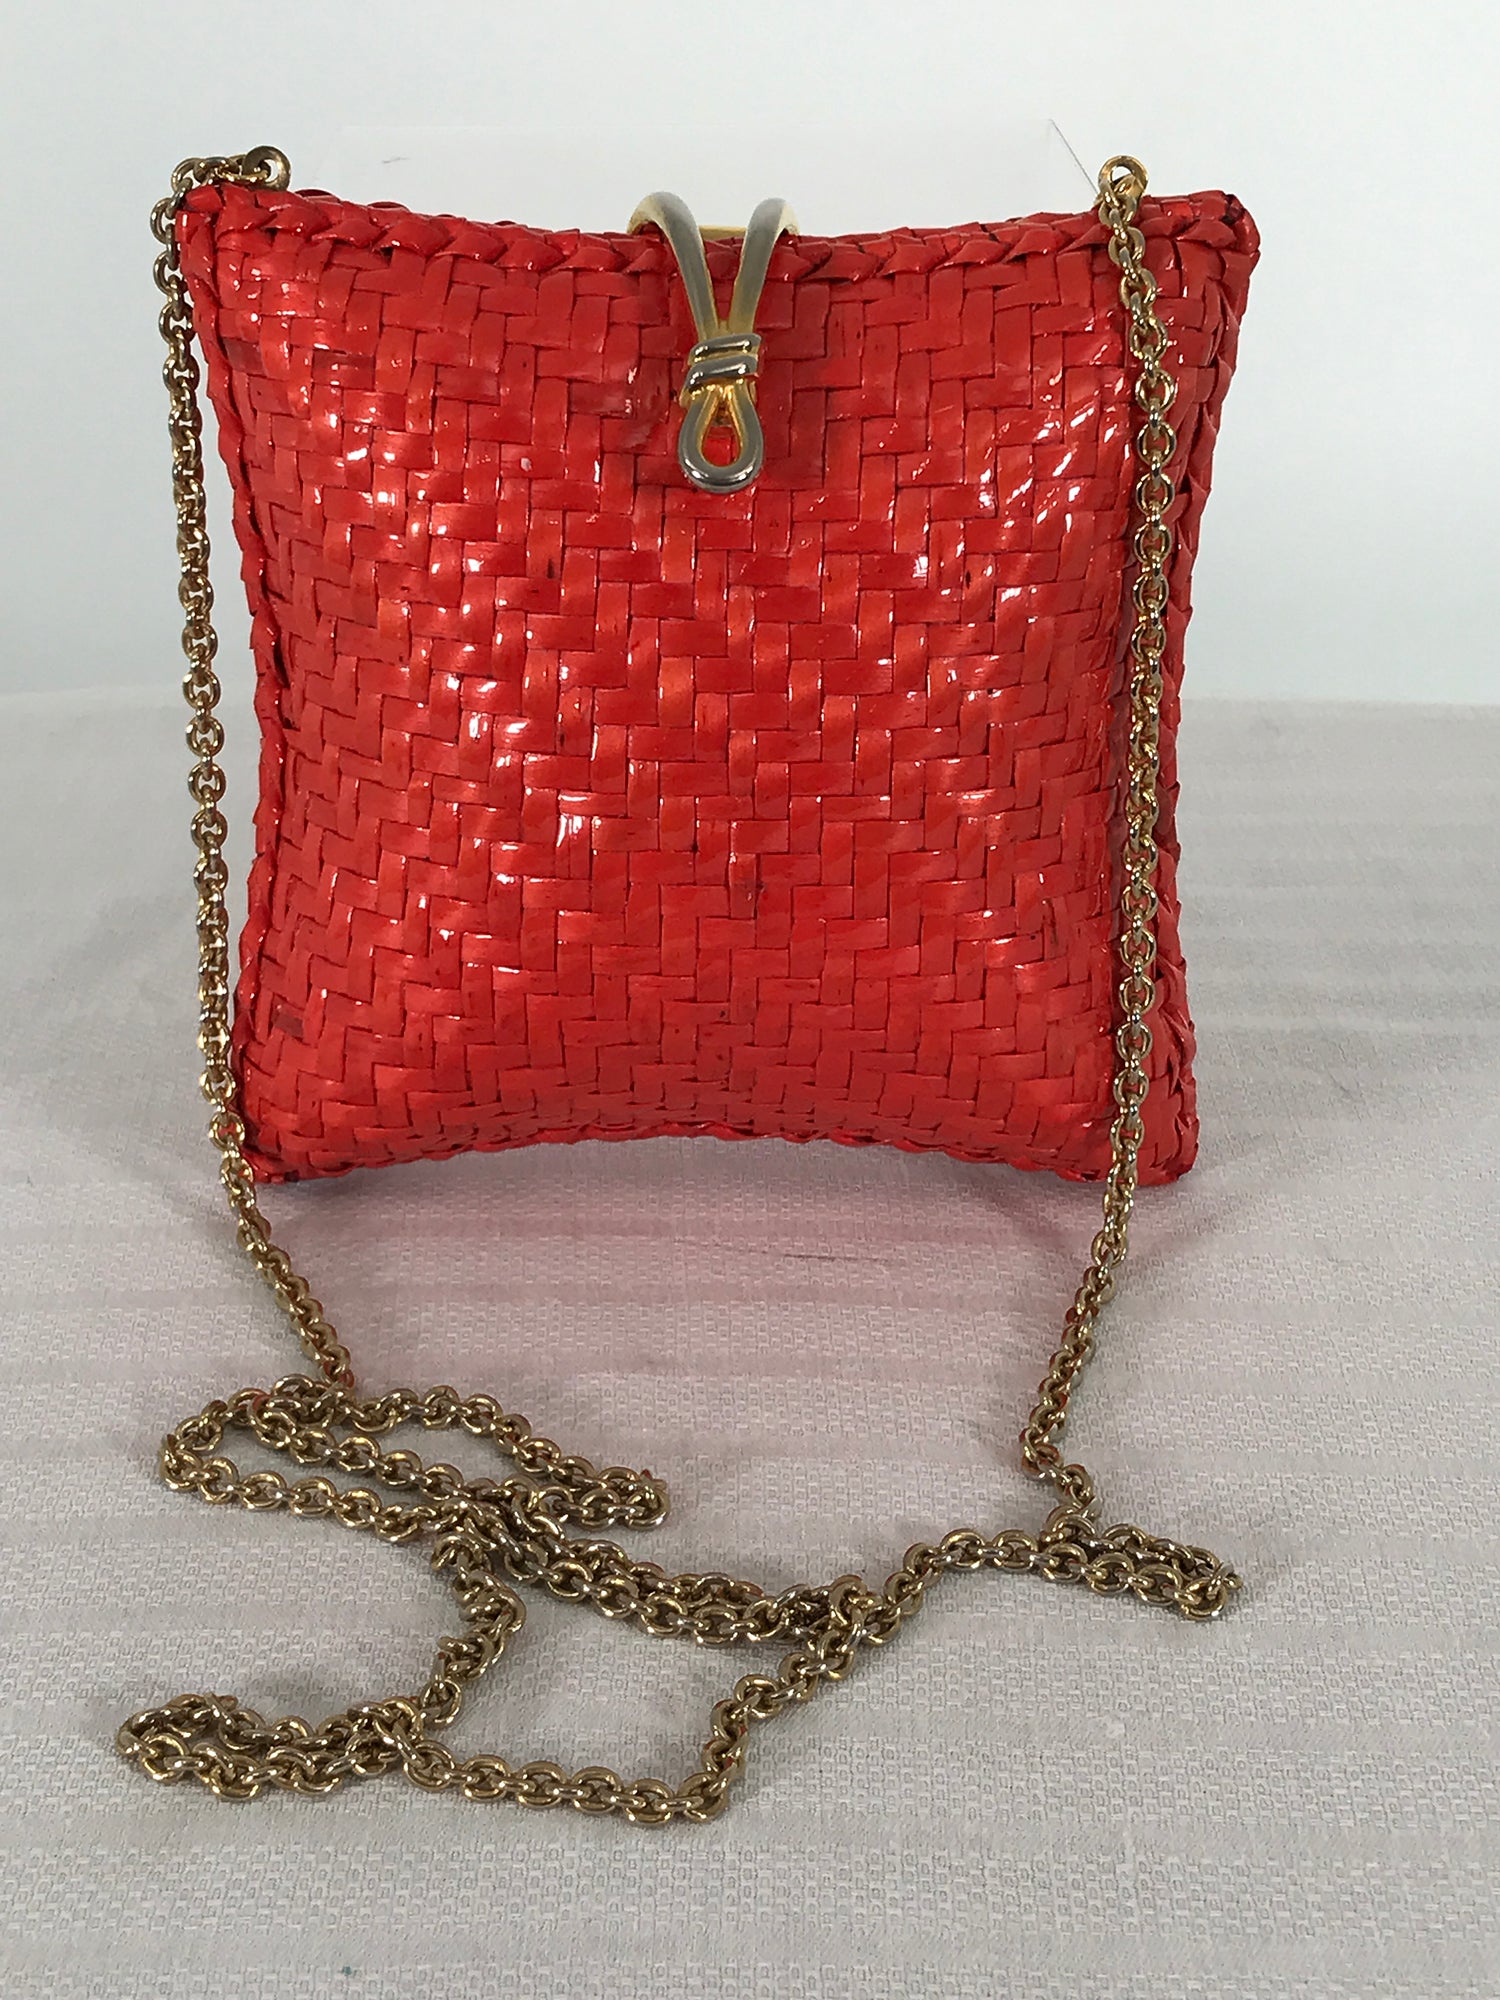 RODO Italy Square Orange Wicker Gold Chain Shoulder Bag 1970s – Palm Beach  Vintage